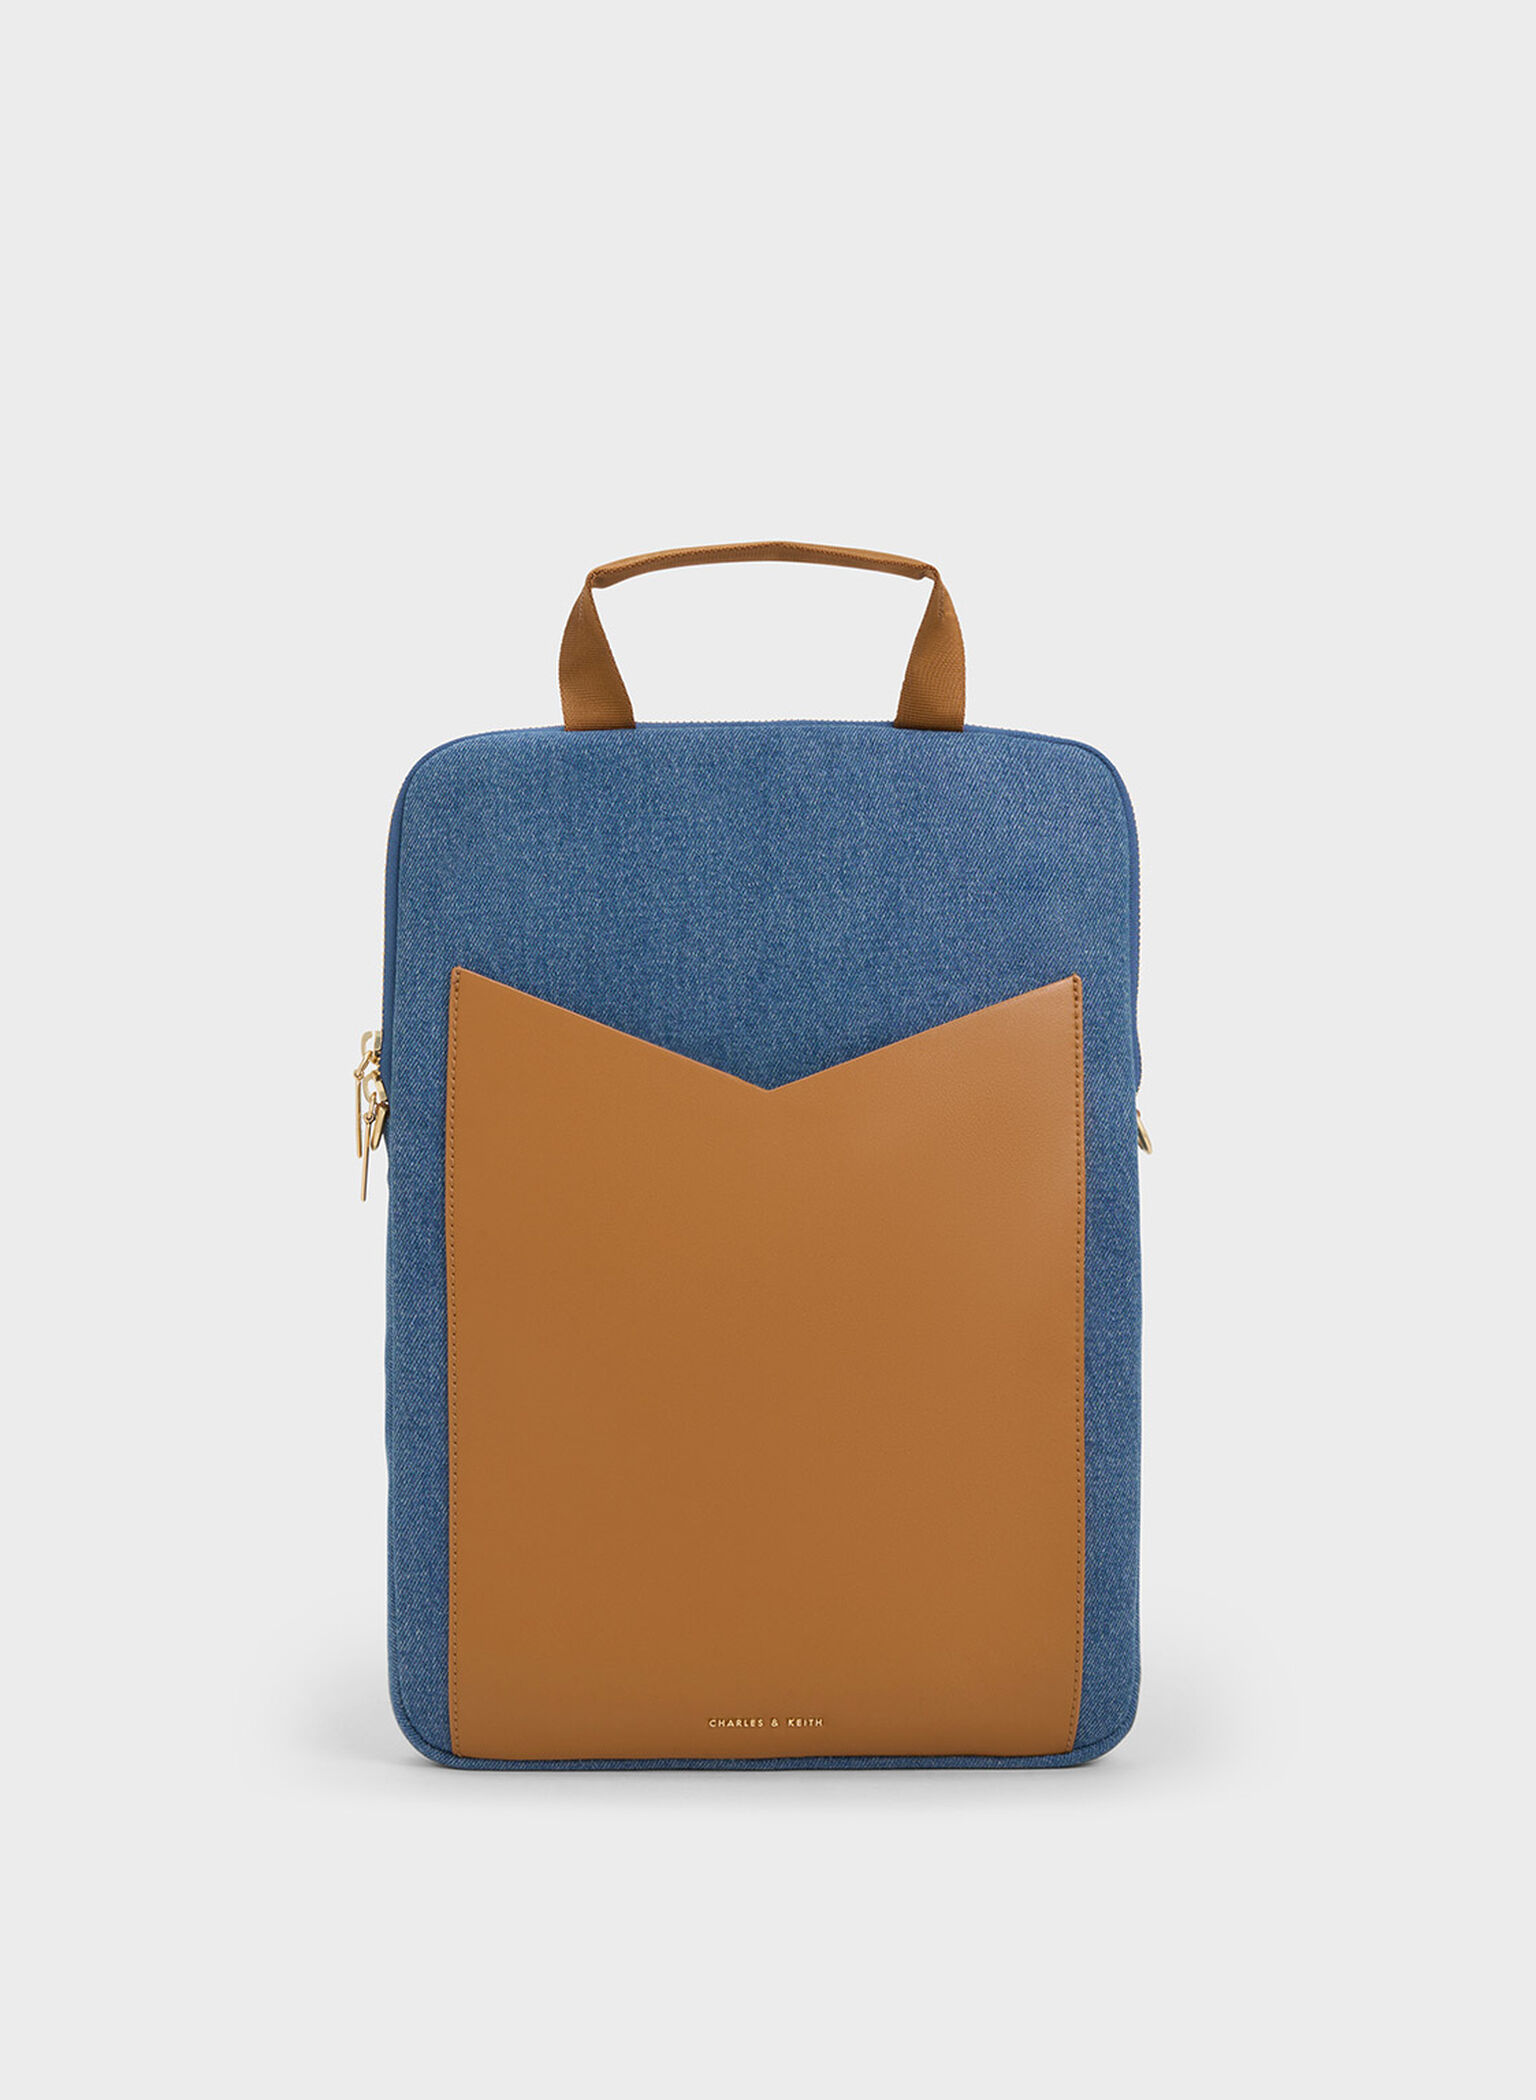 Gaia Denim Laptop Bag, Denim Blue, hi-res